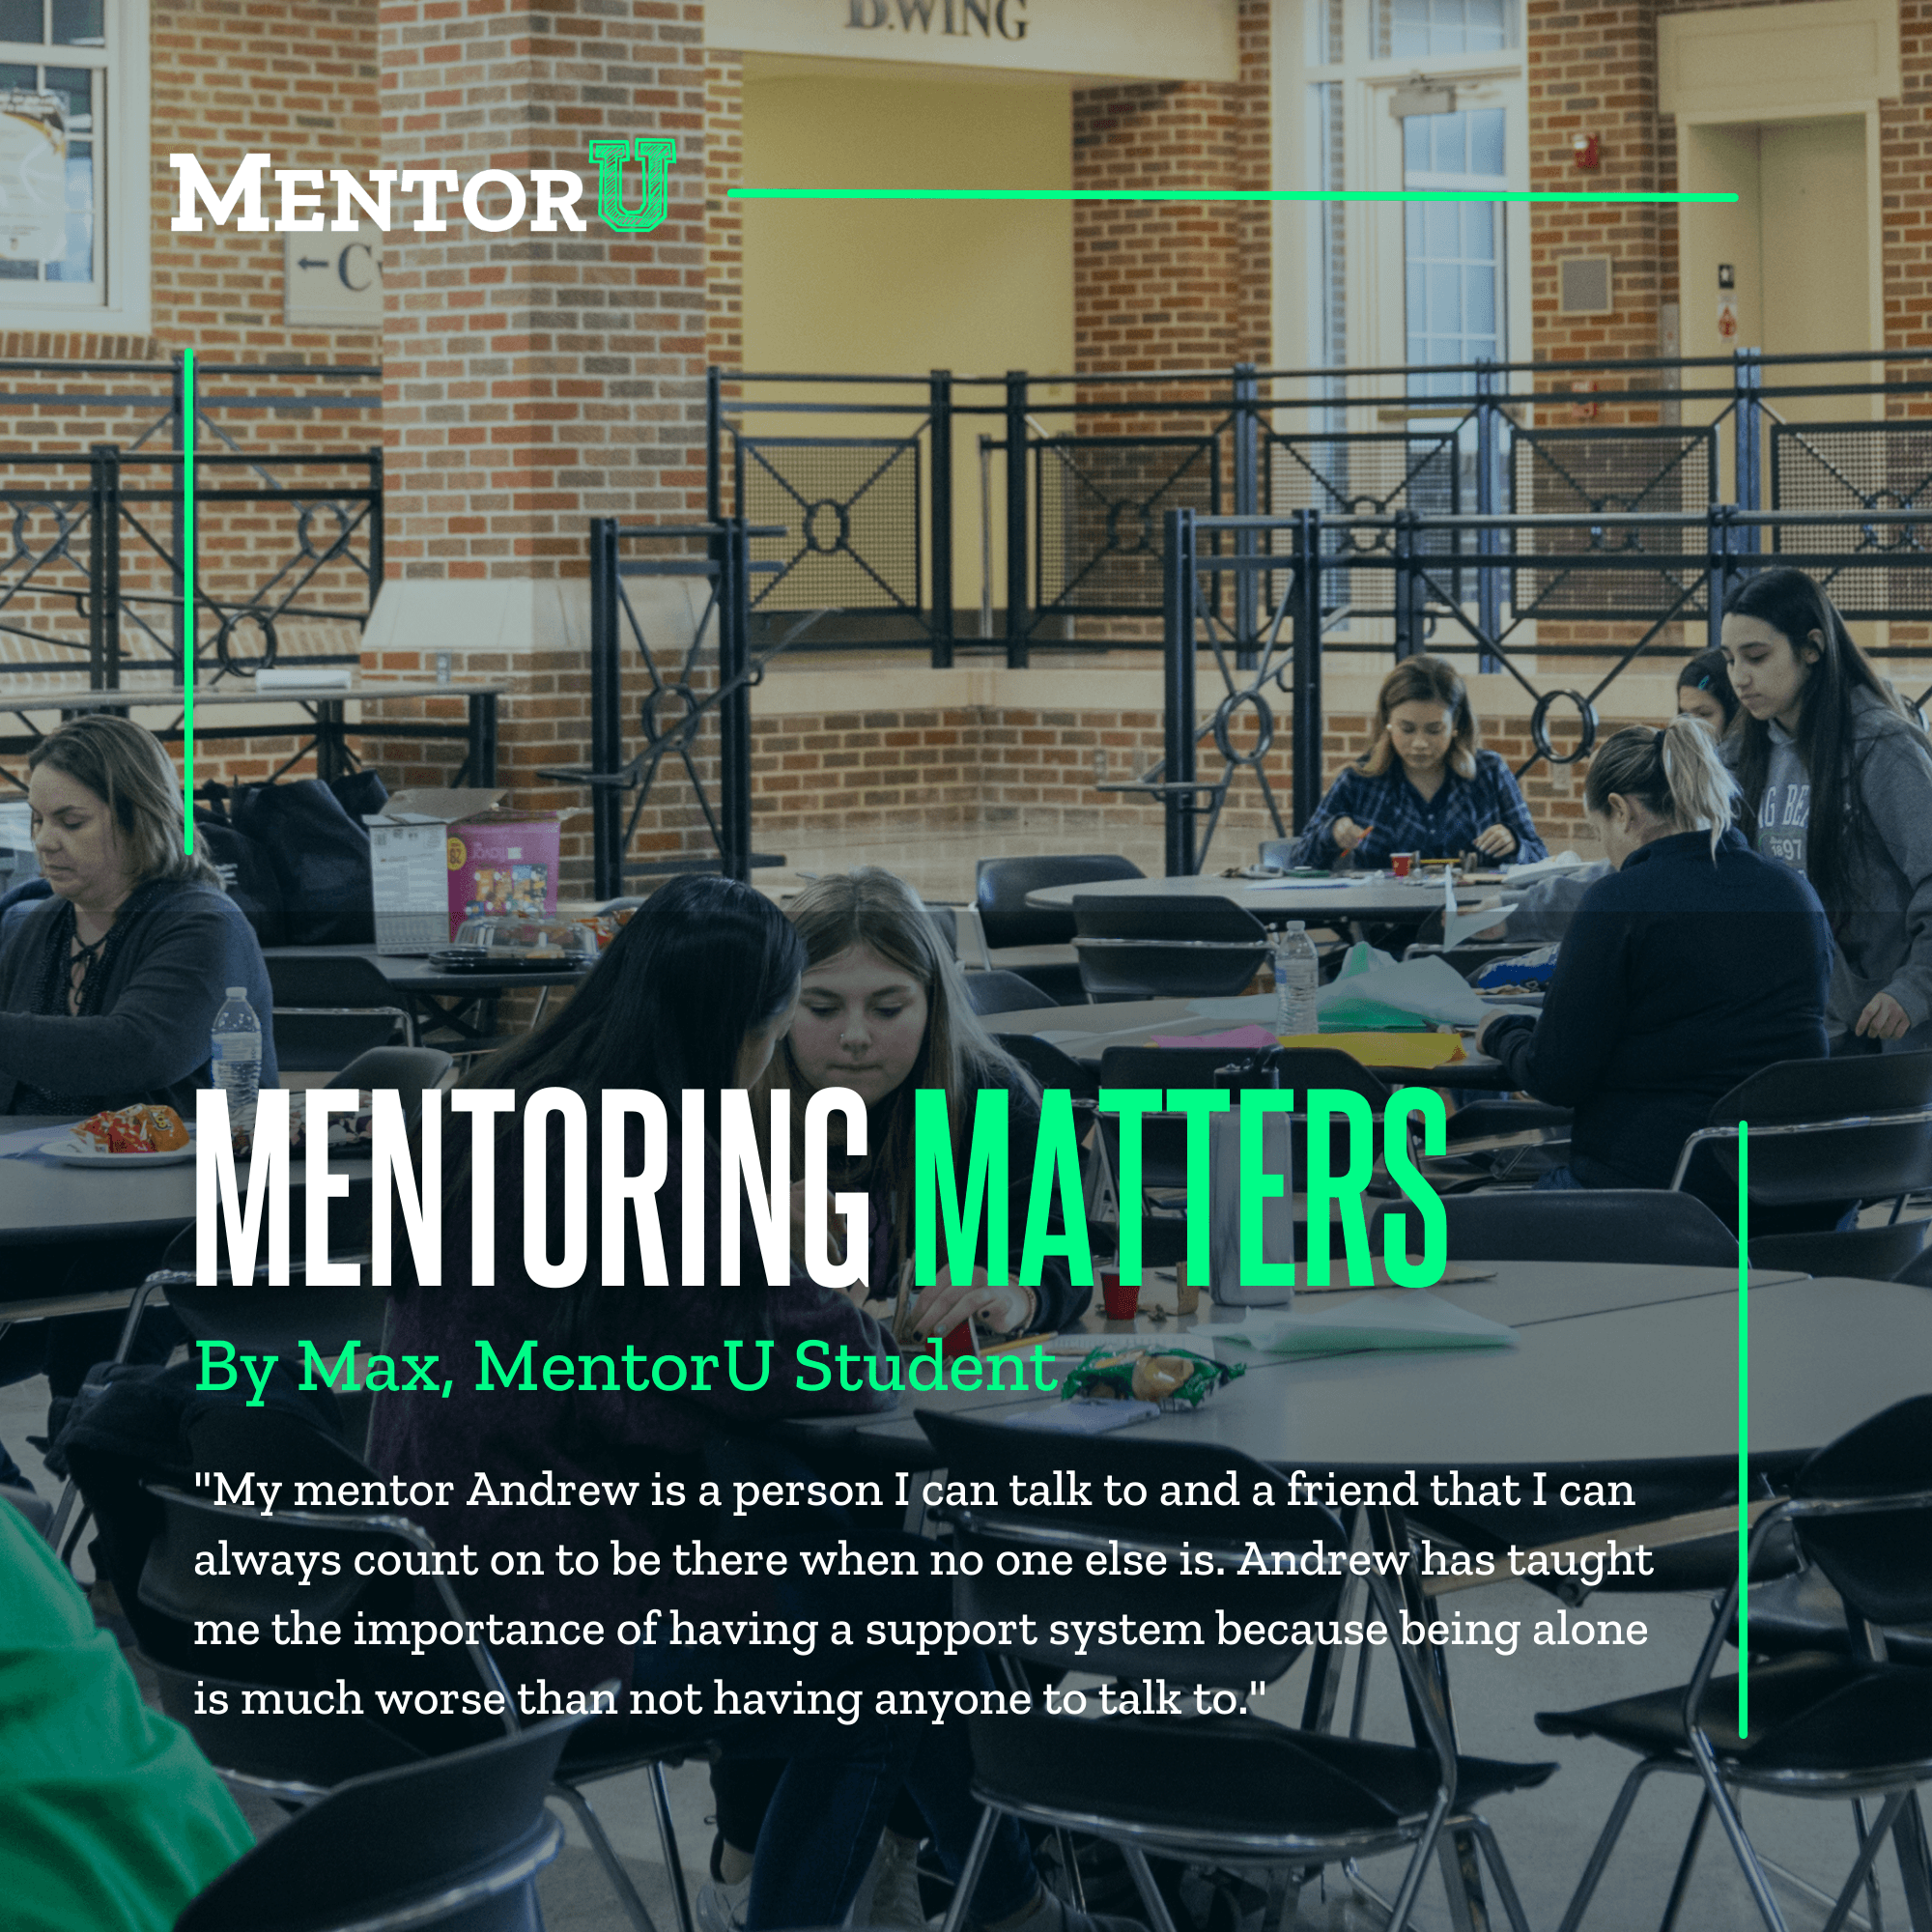 Mentoring Matters by Max, MentorU Student